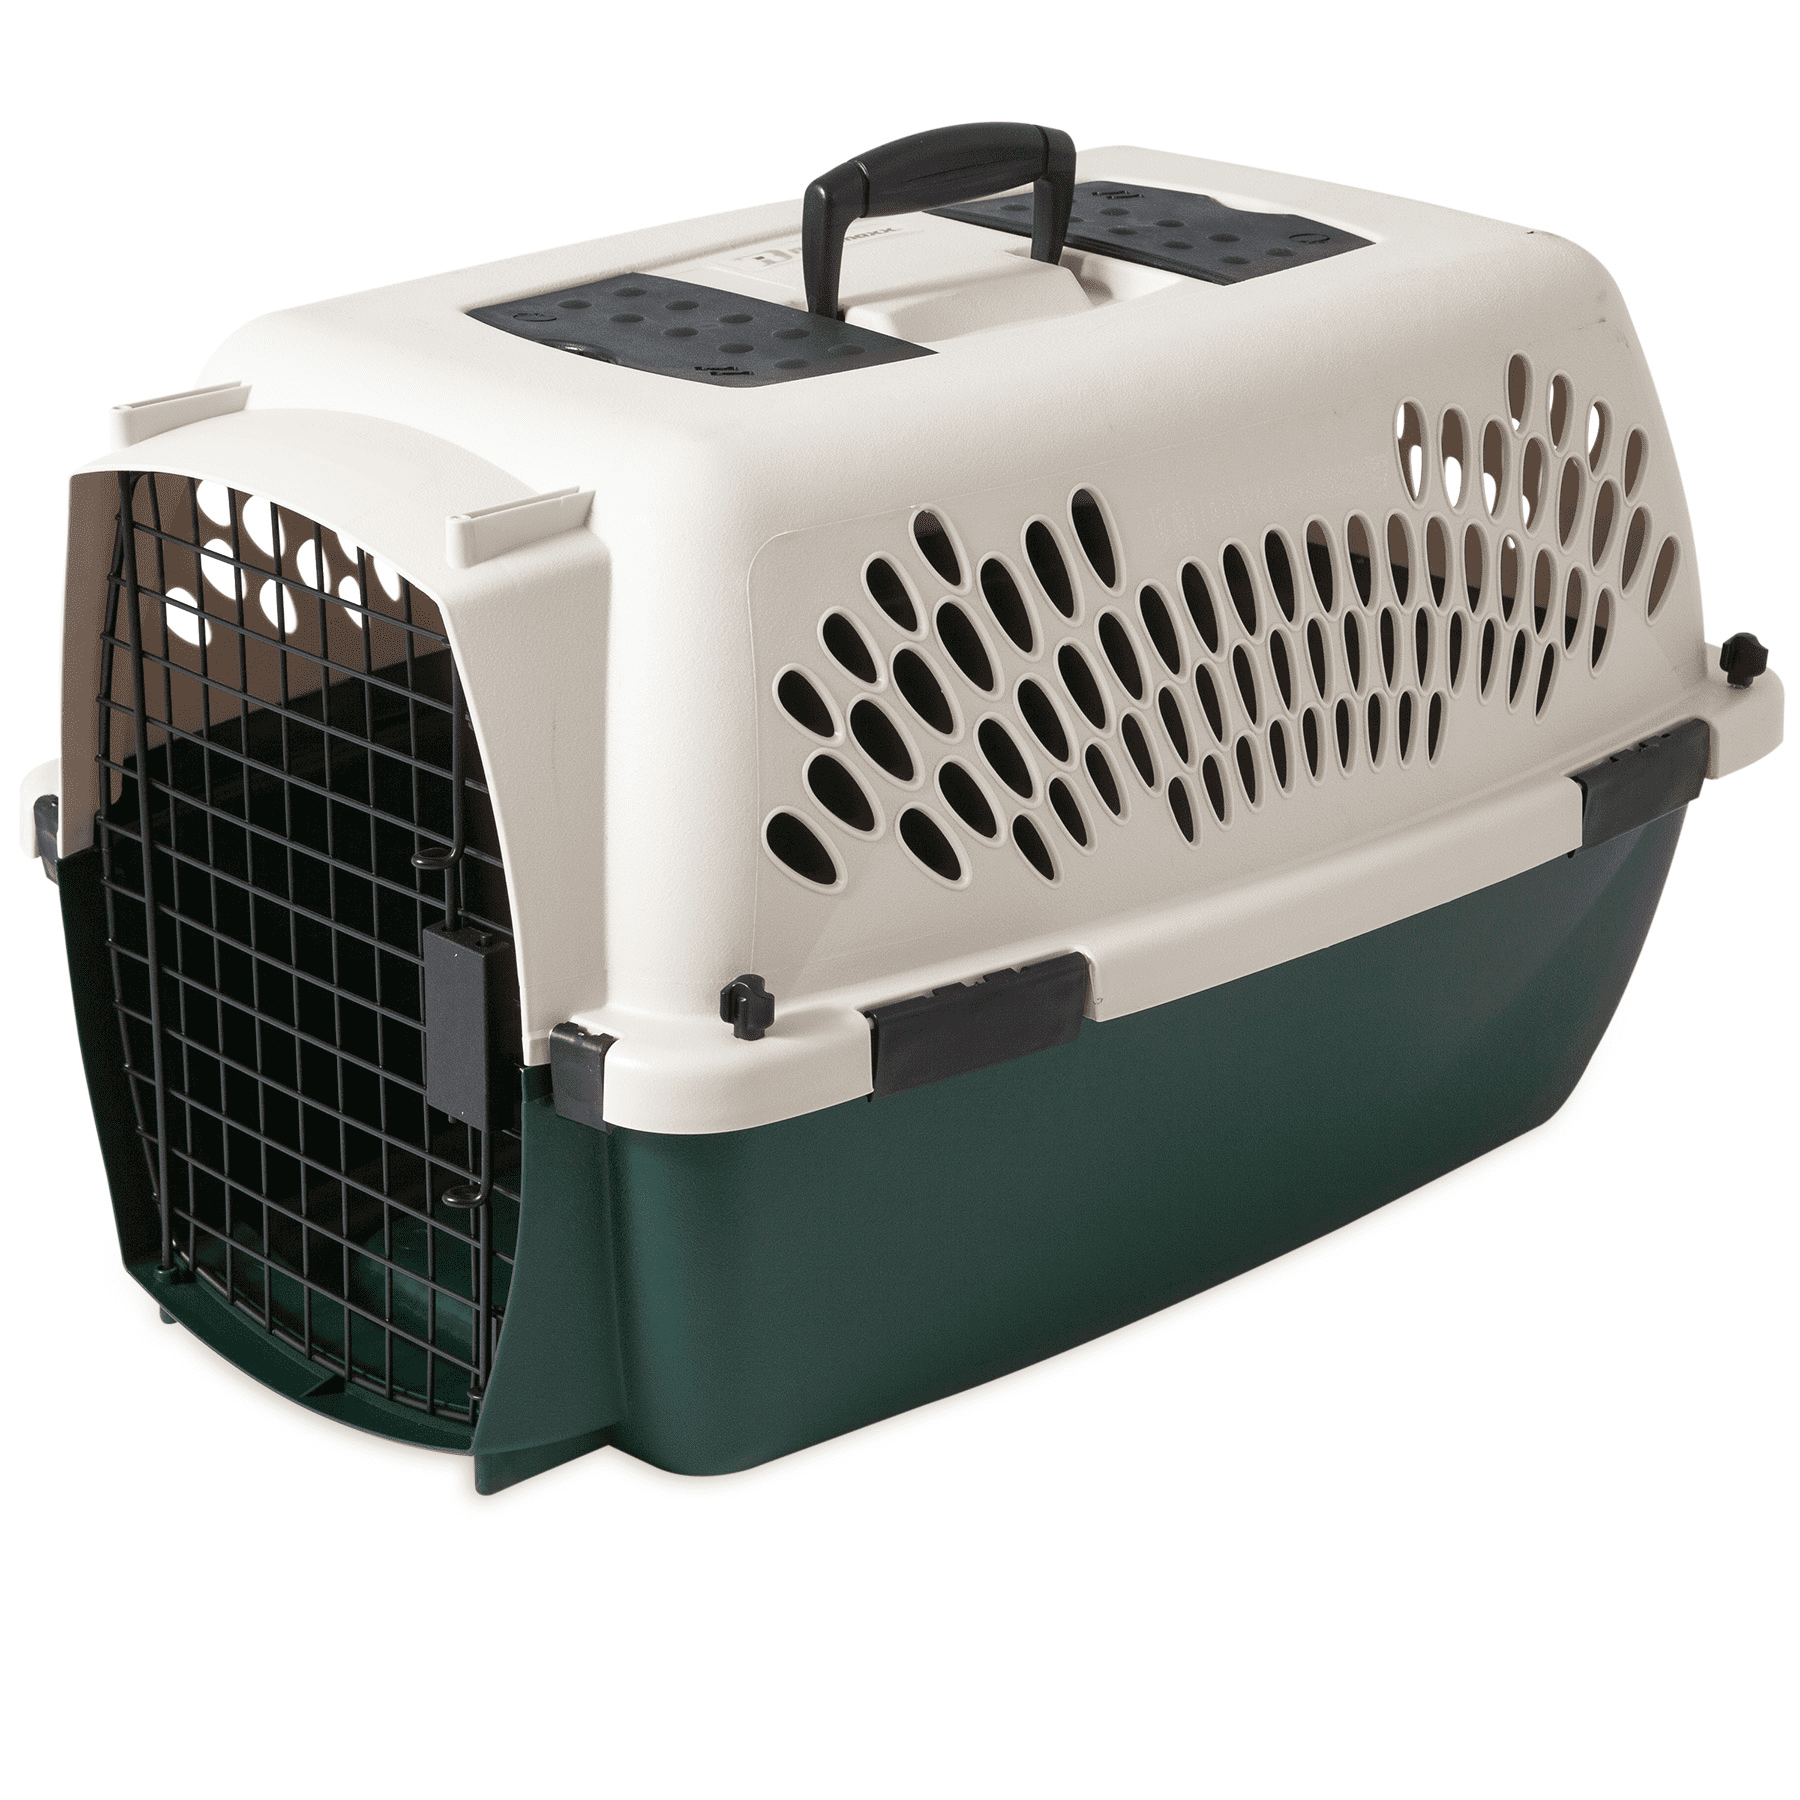 ruff maxx dog crate